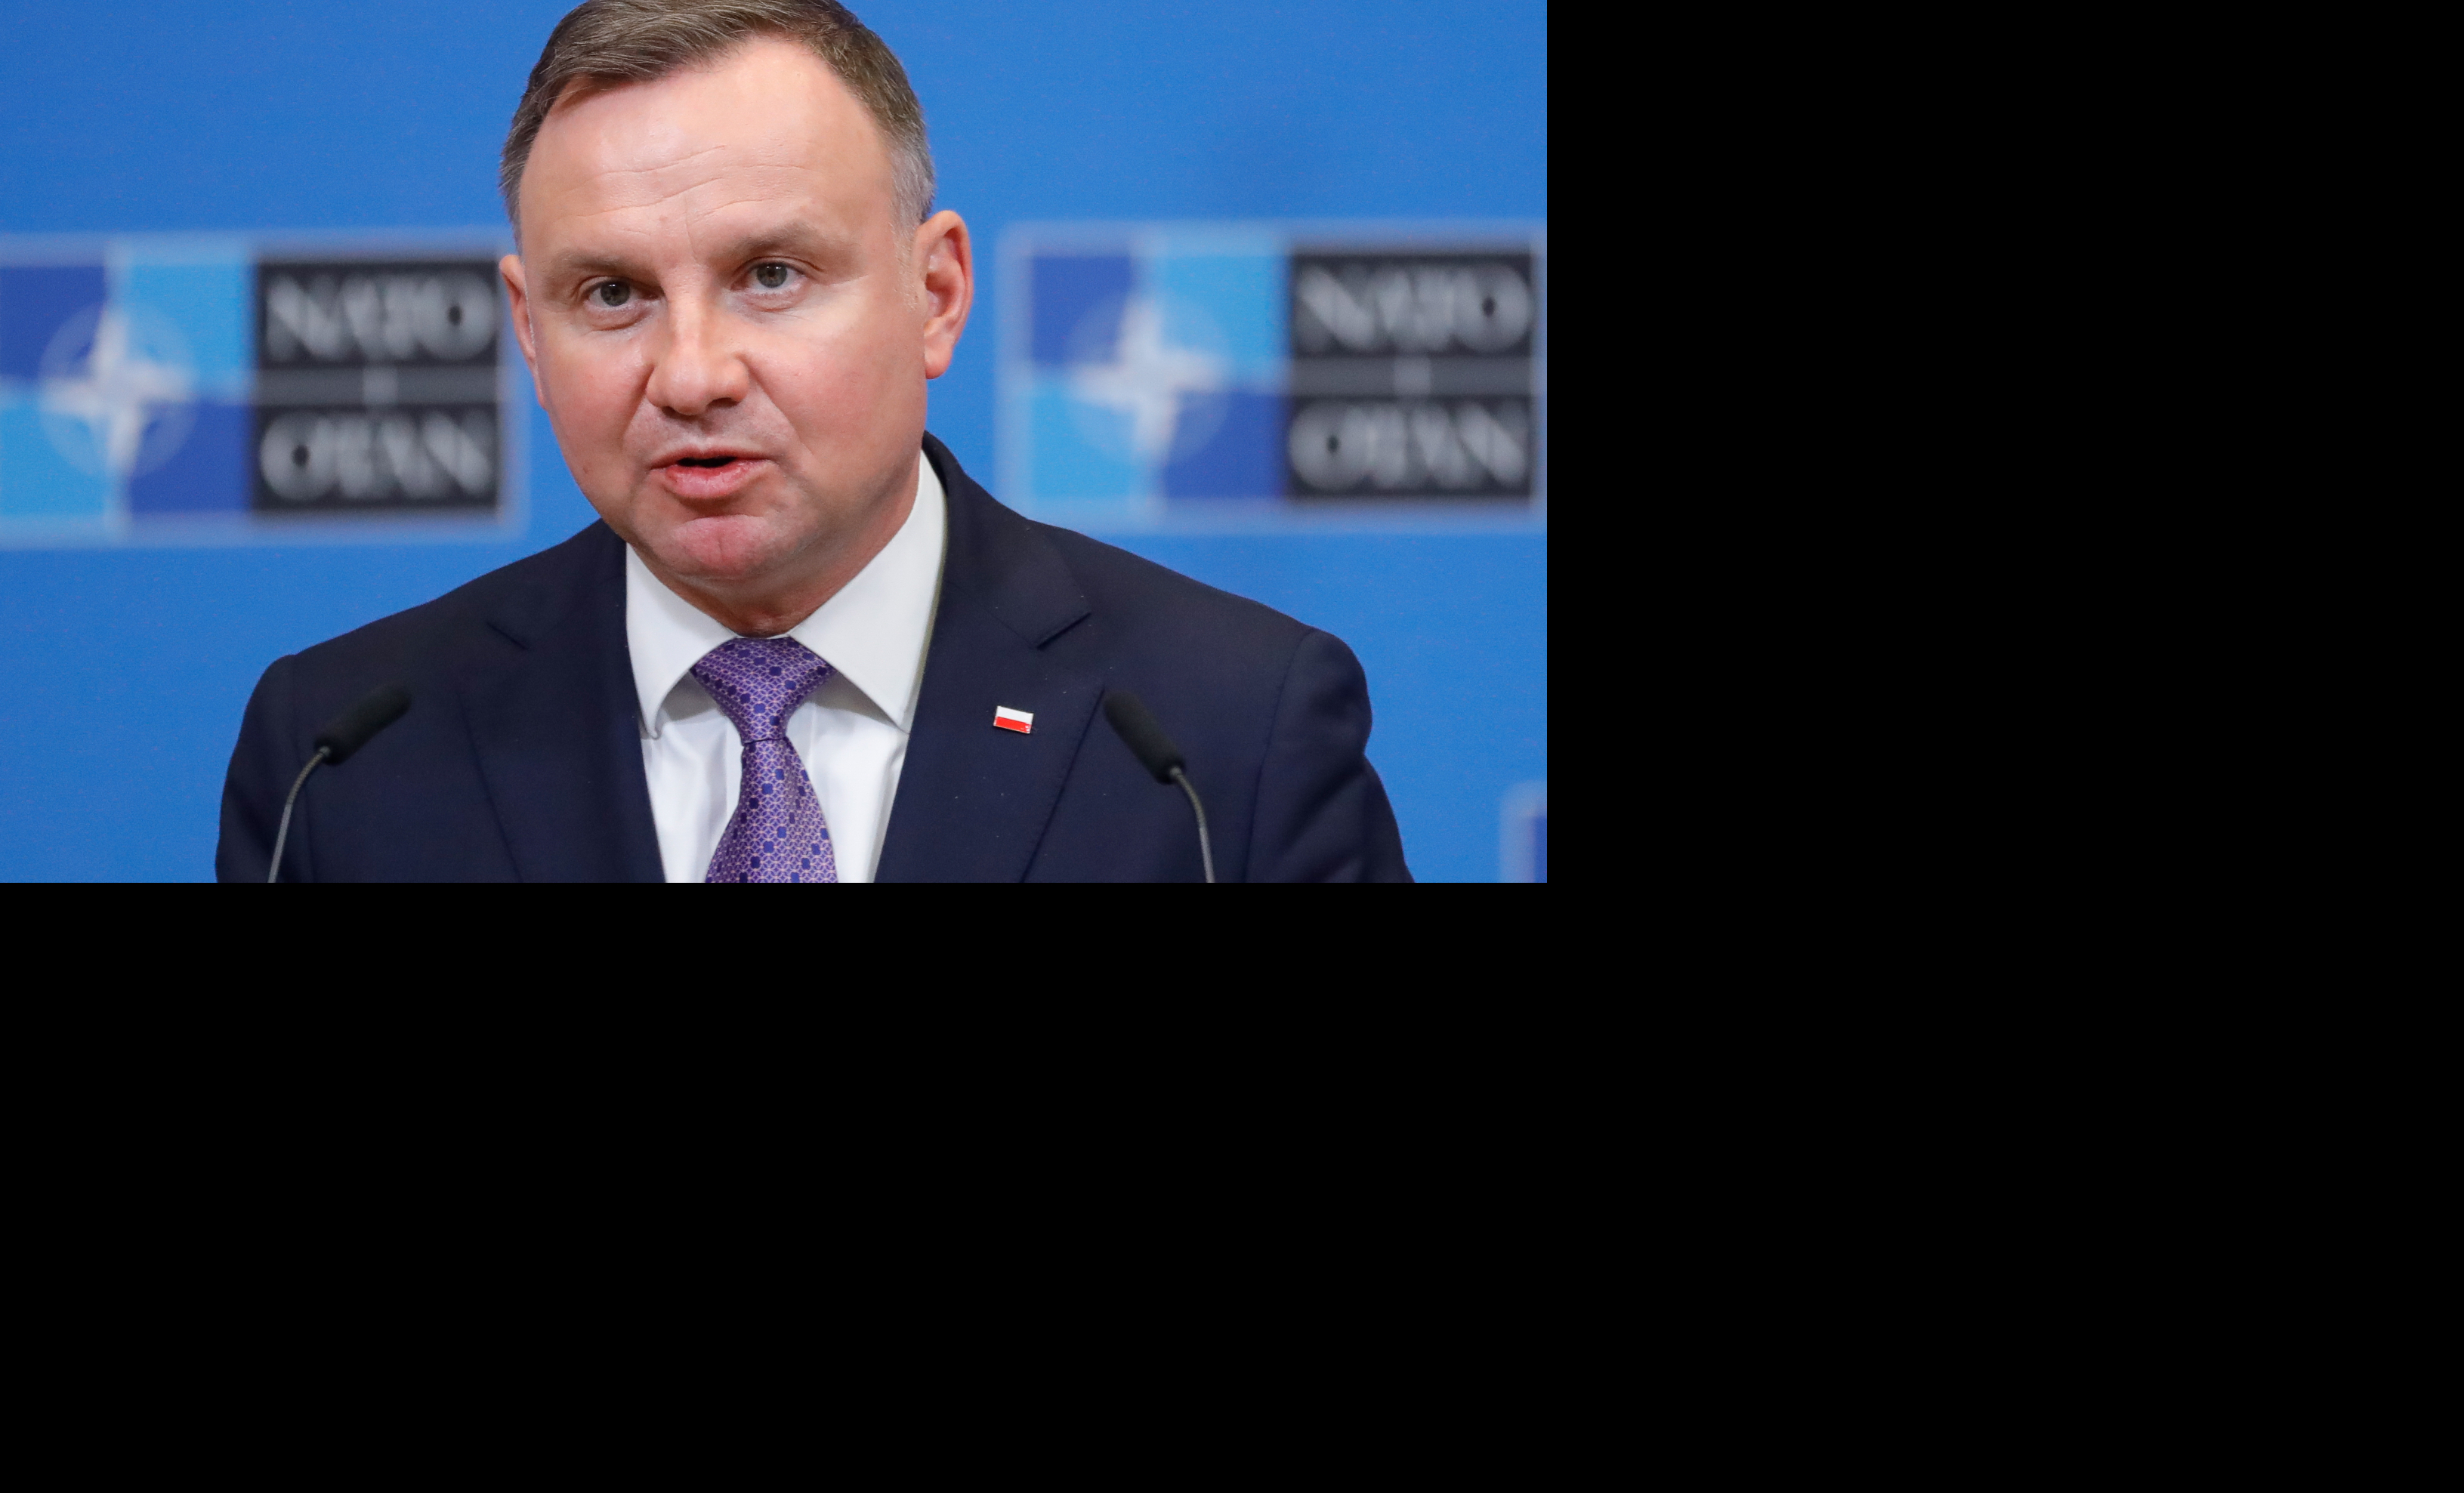 POLJSKA SE SPREMA ZA NAPAD? Predsednik Poljske zatražio od Stoltenberga: NATO da poveća svoje prisustvo!